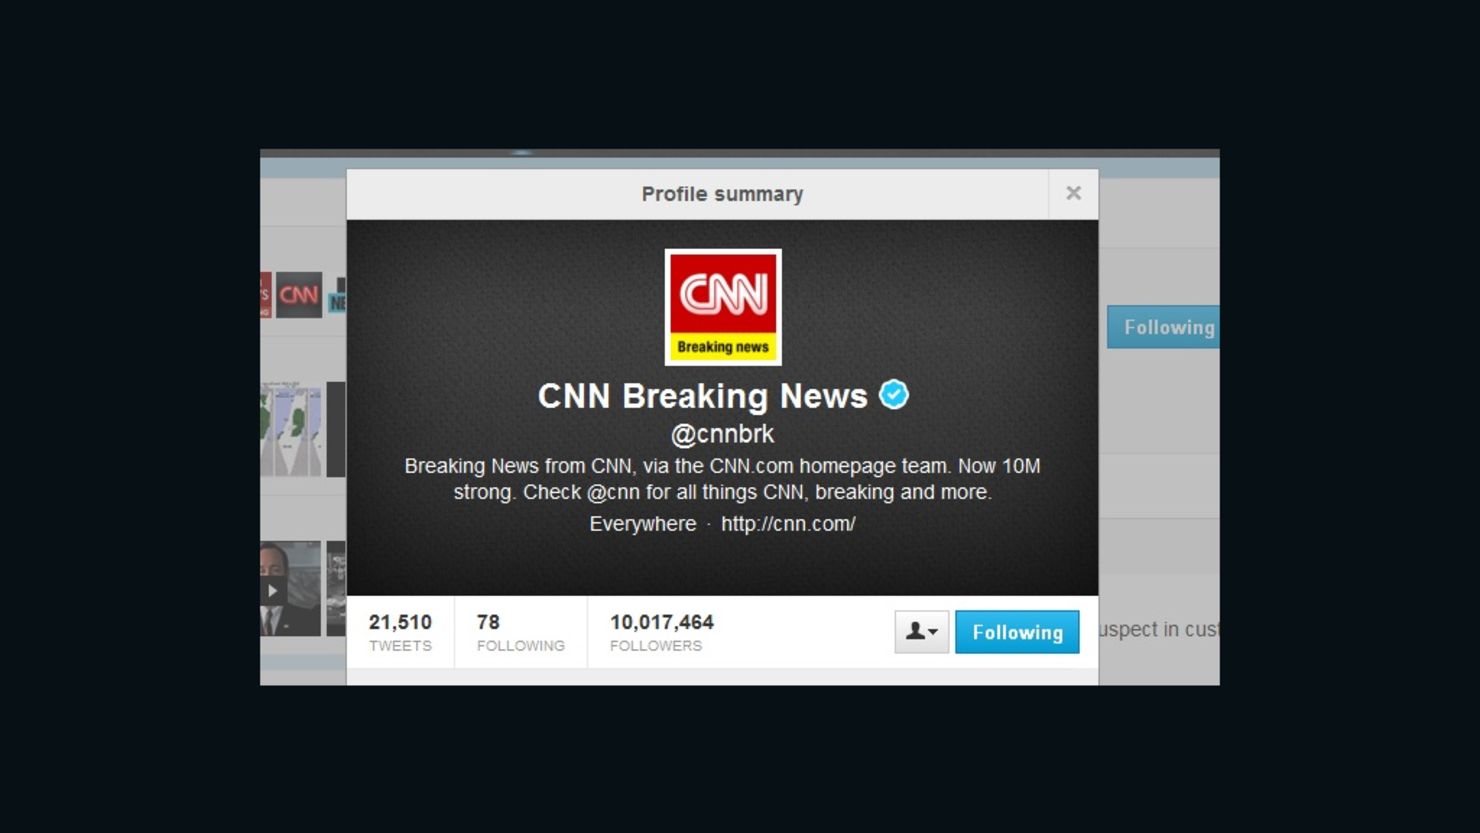 CNN's @cnnbrk Twitter account hit 10 million followers on Monday.